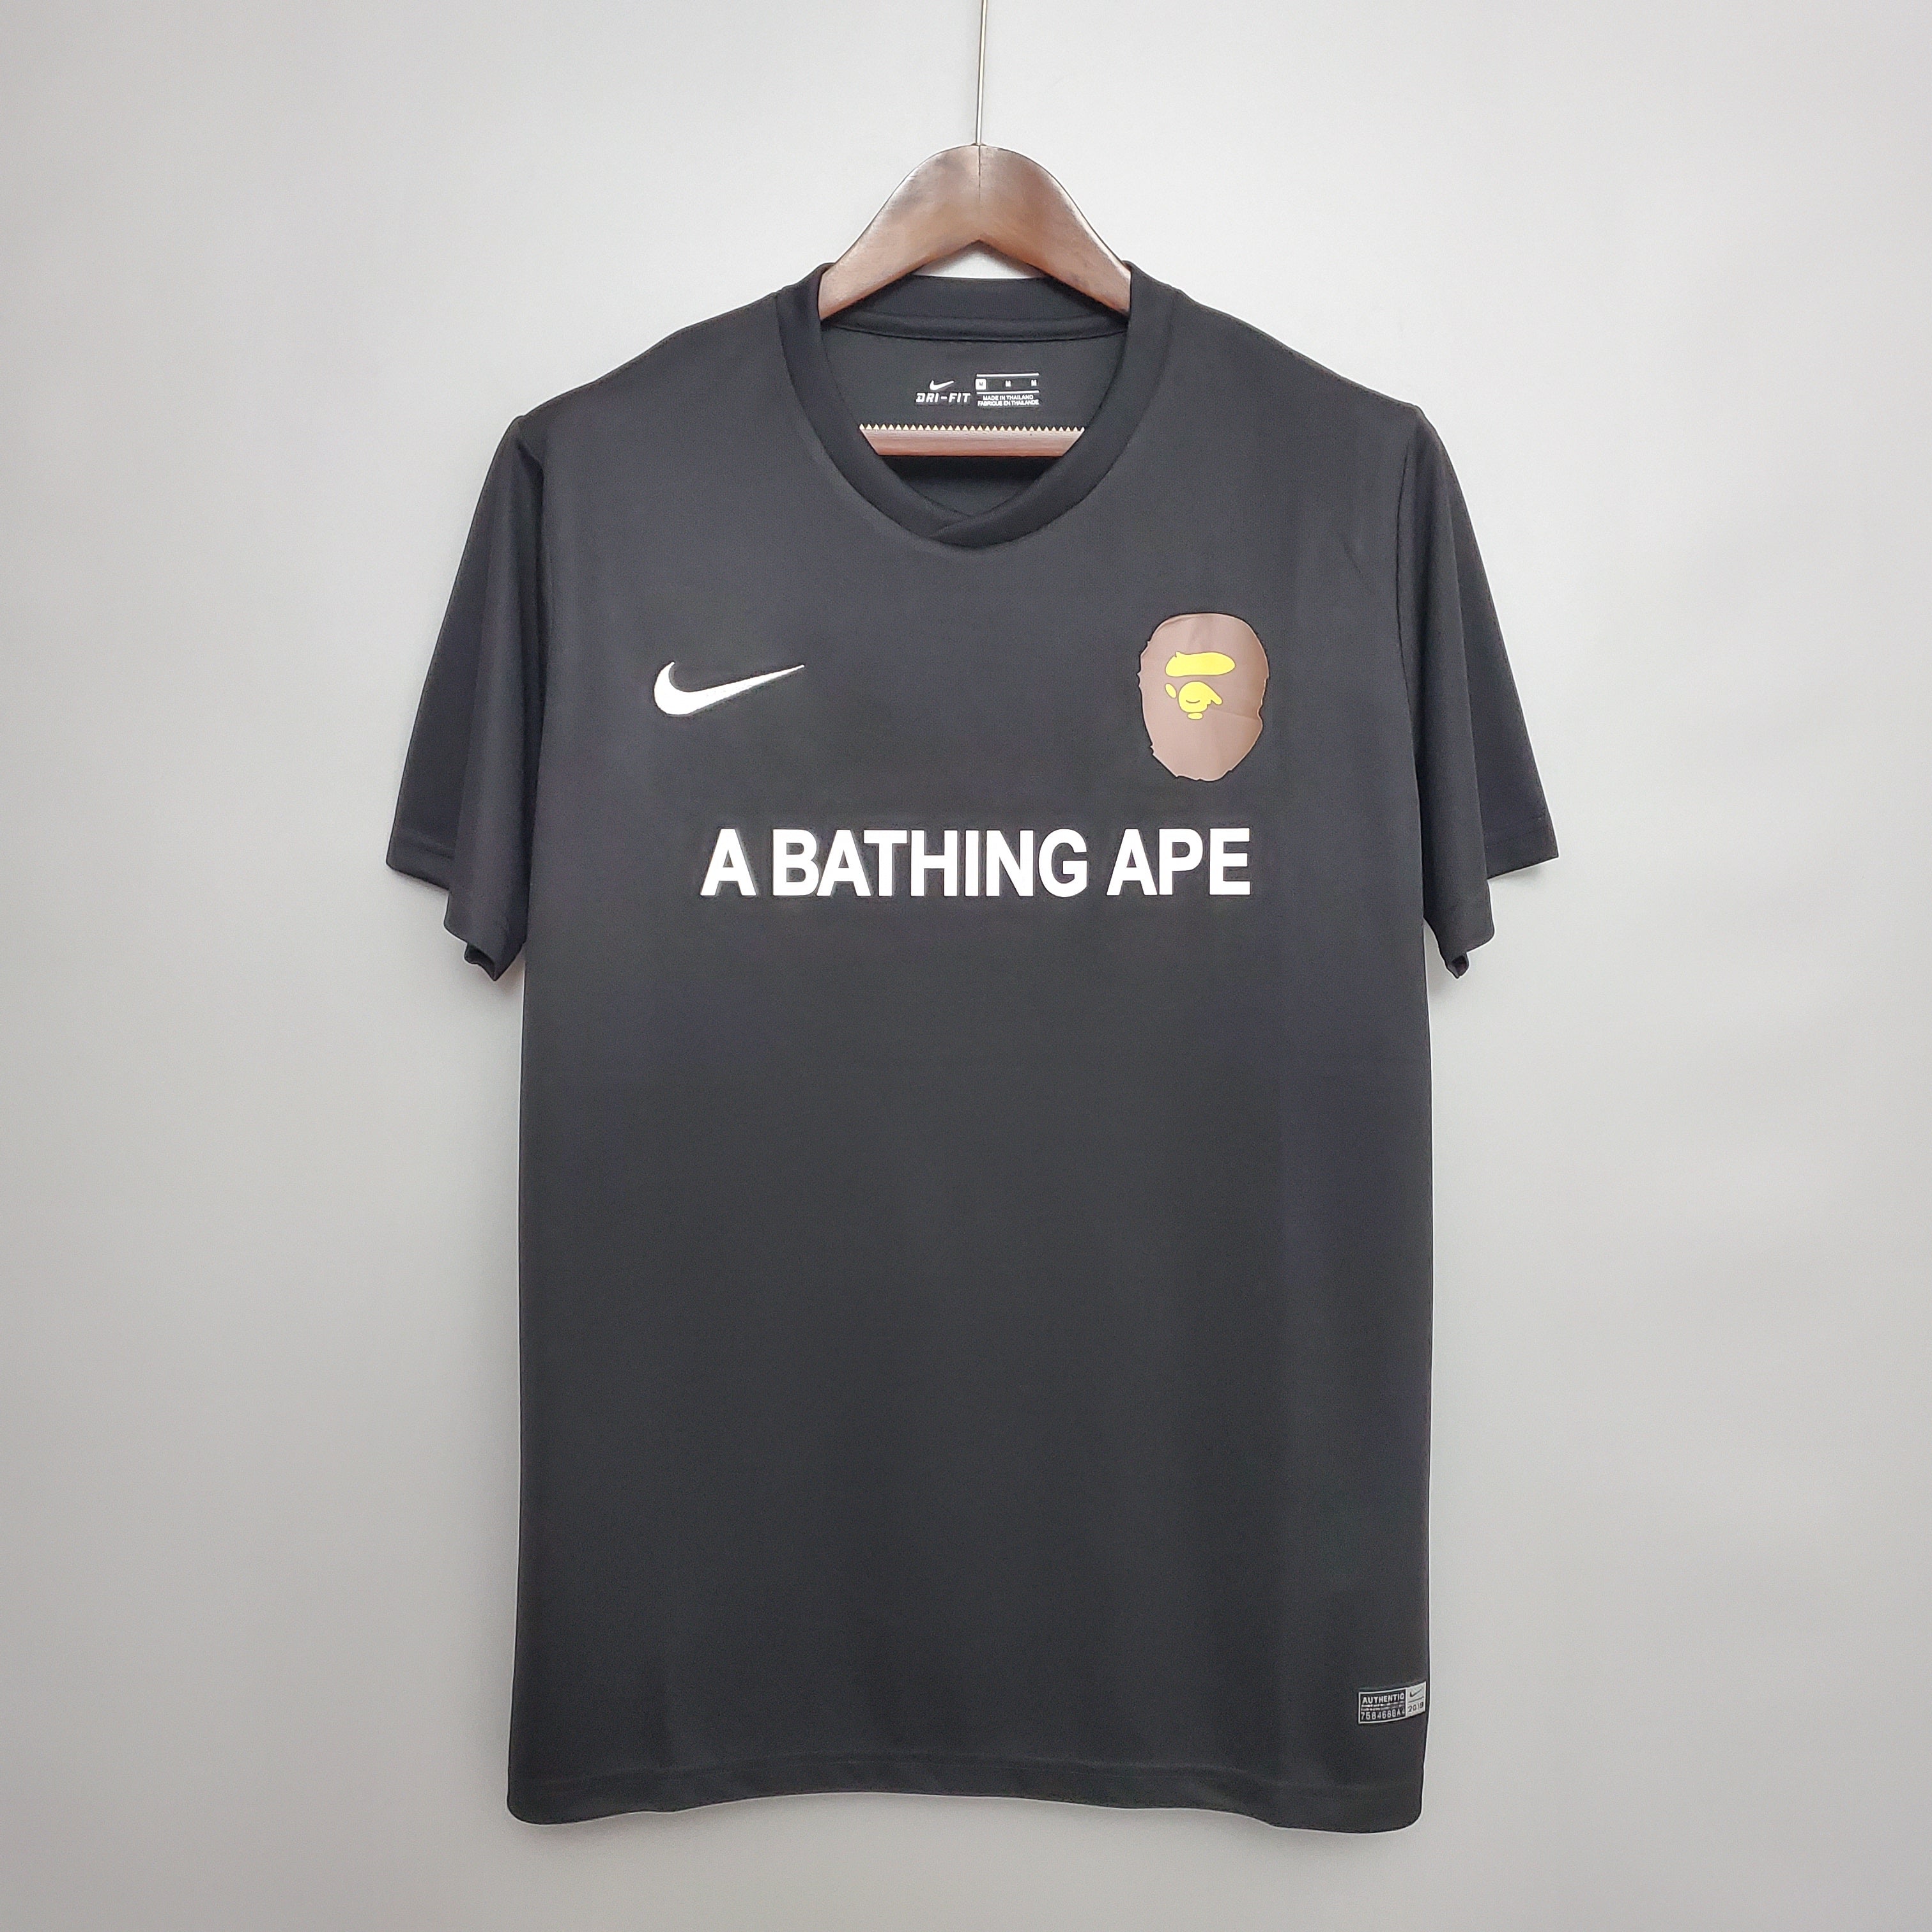 A BATHING APE Football Kit